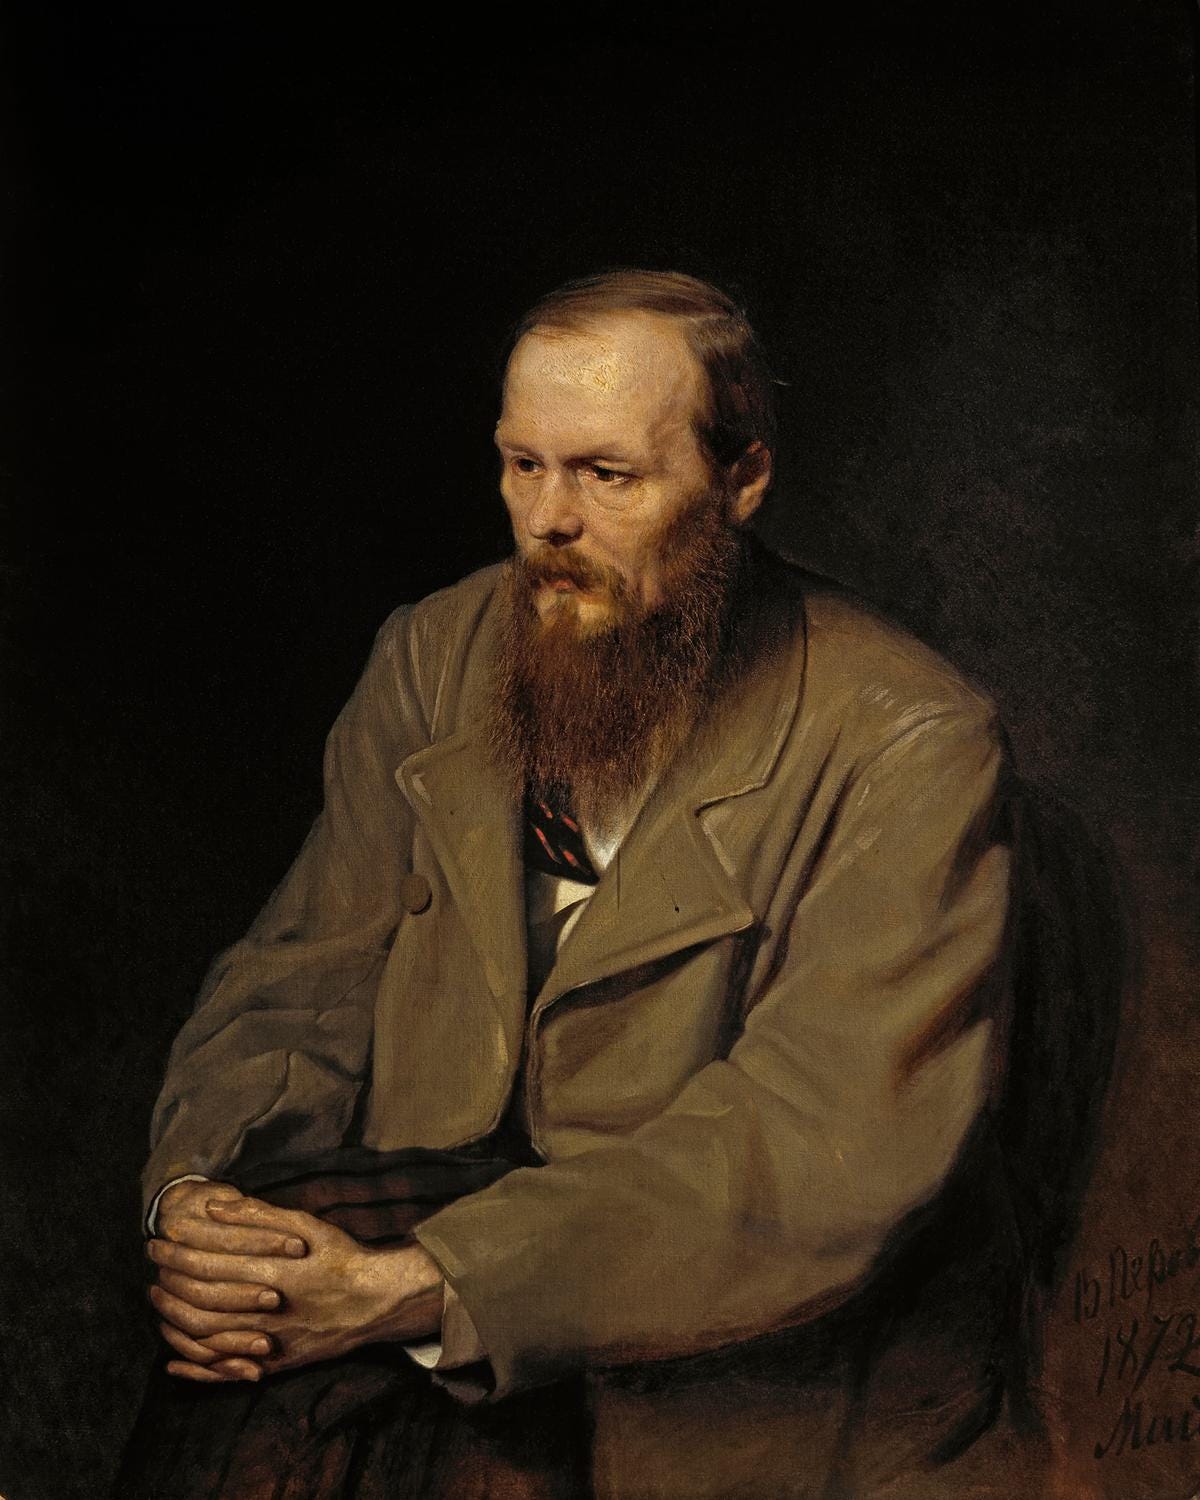  Portrait of Fyodor Dostoevsky, 1872, by Vasily Perov. Oil on canvas. Tretyakov Gallery, Moscow. (Public Domain)